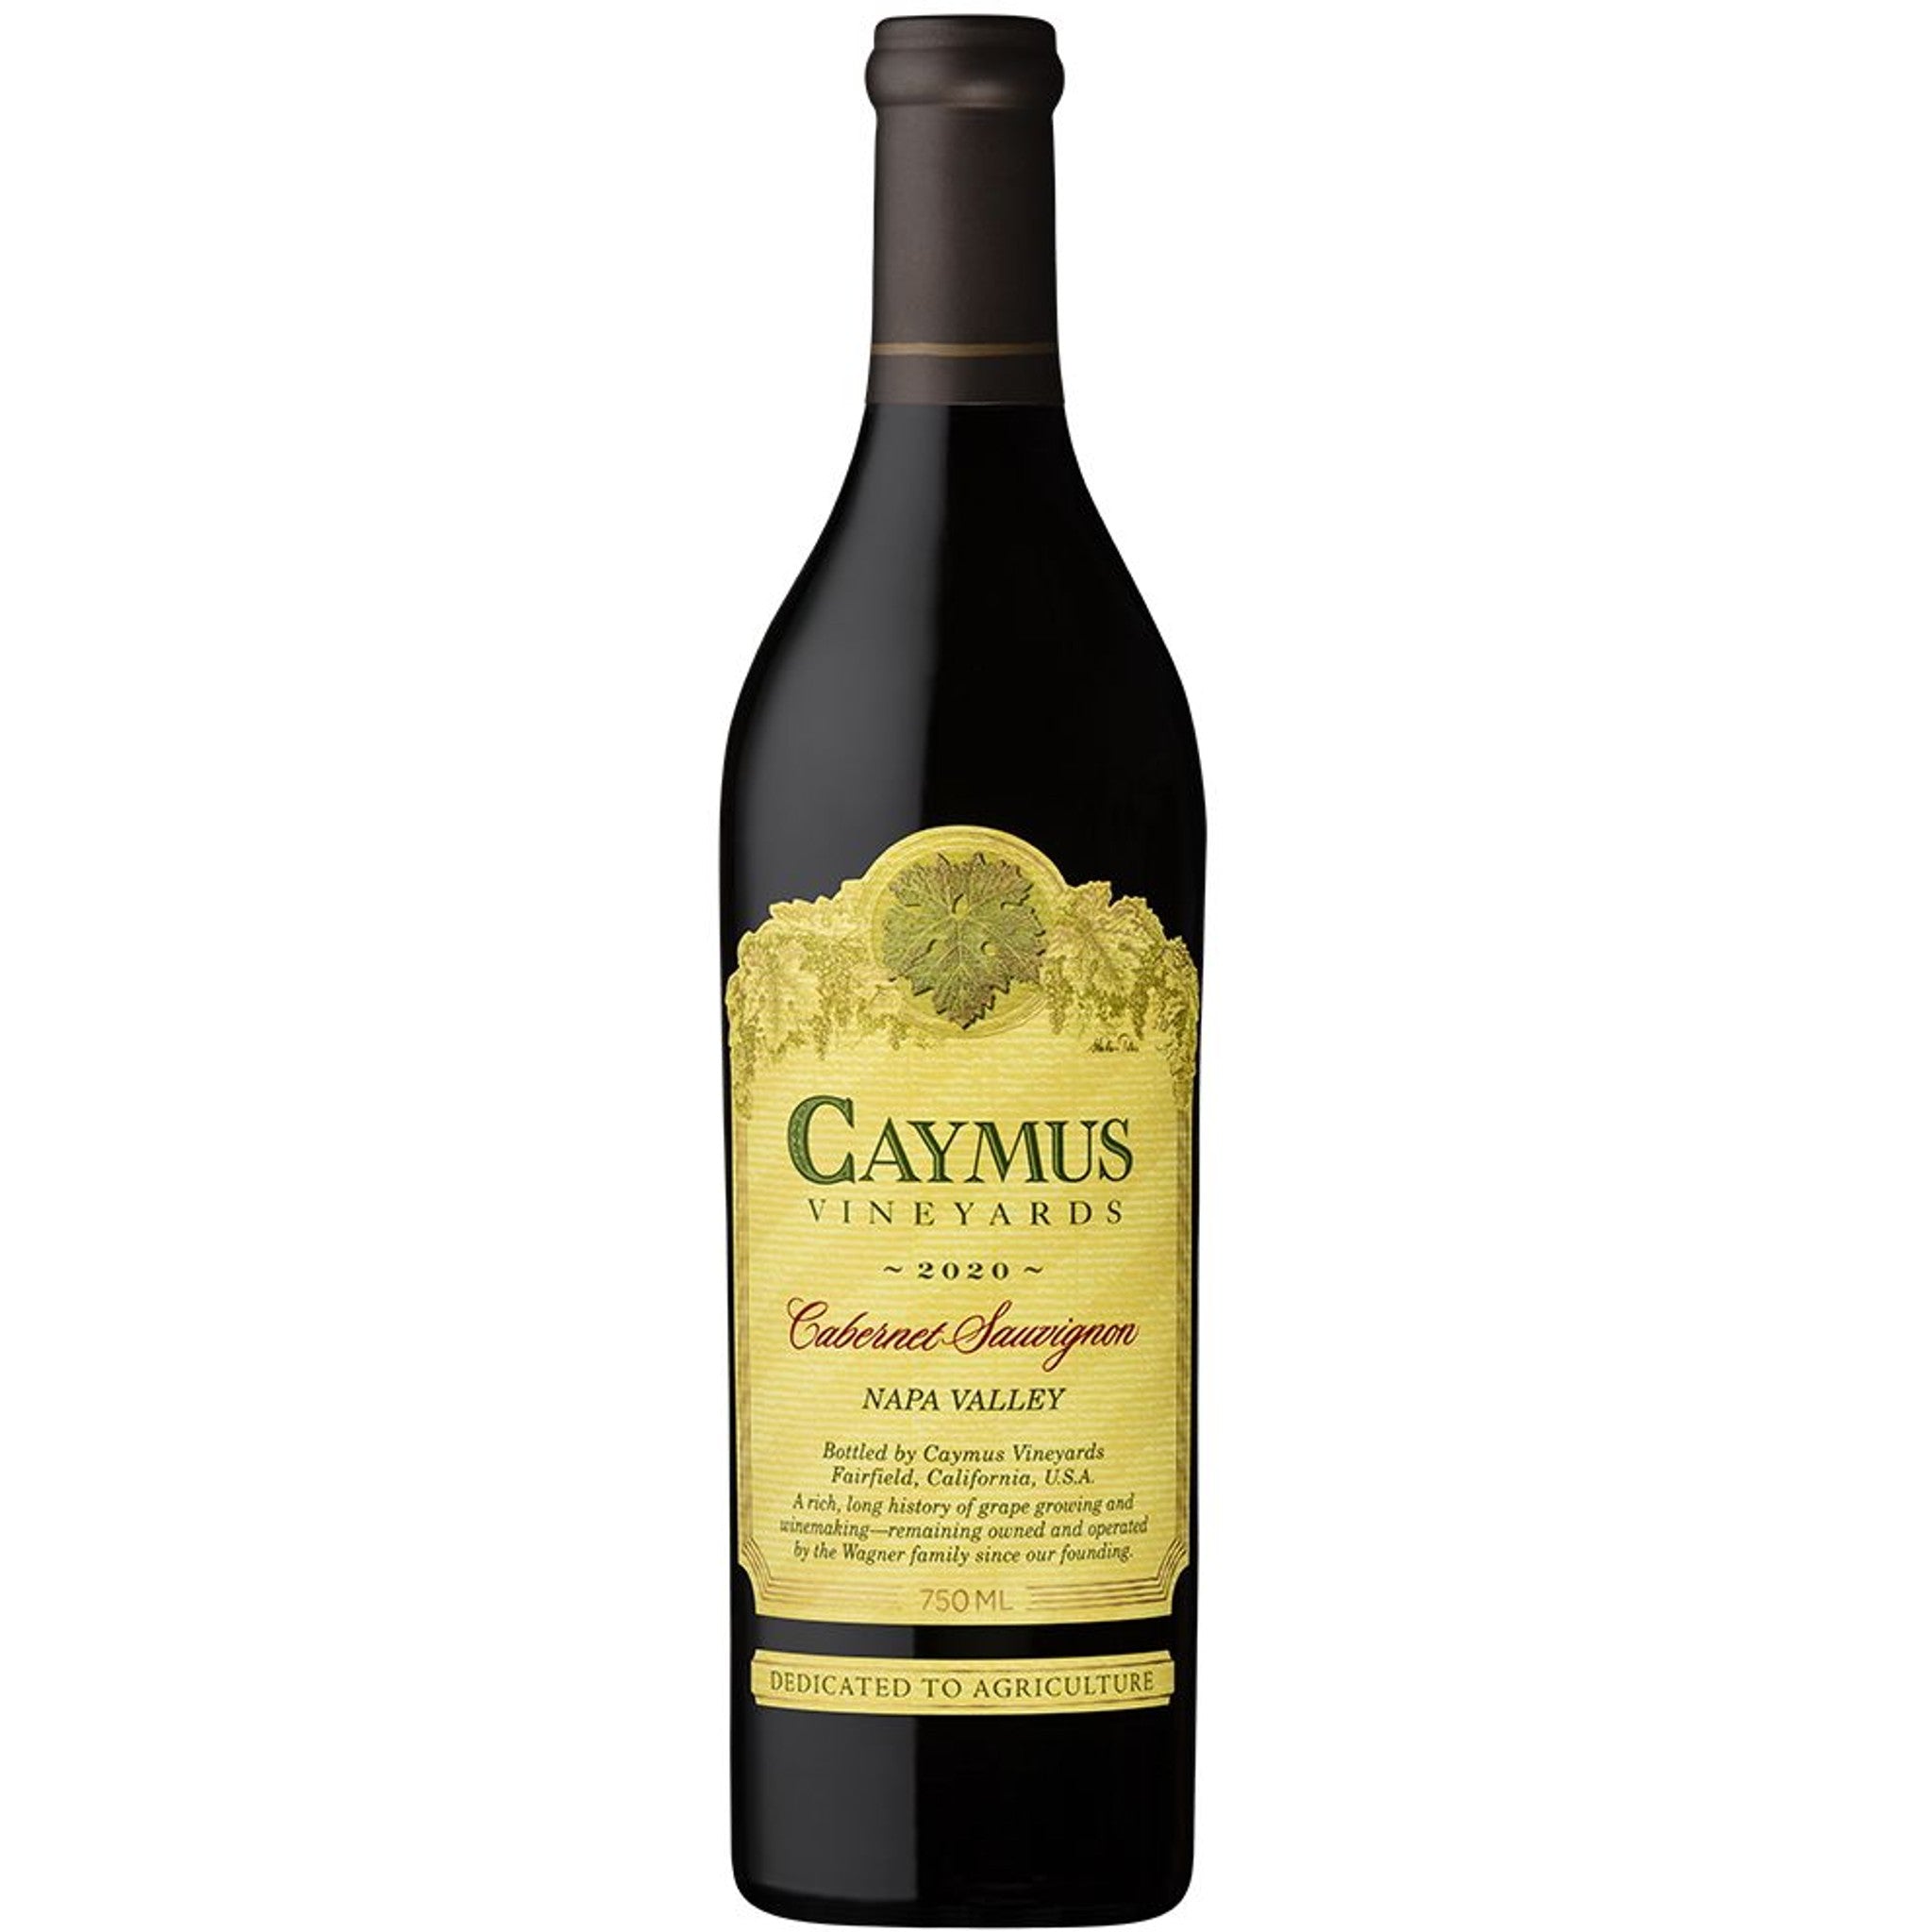 Caymus Vineyards Cabernet Sauvignon 2020 (750ml)